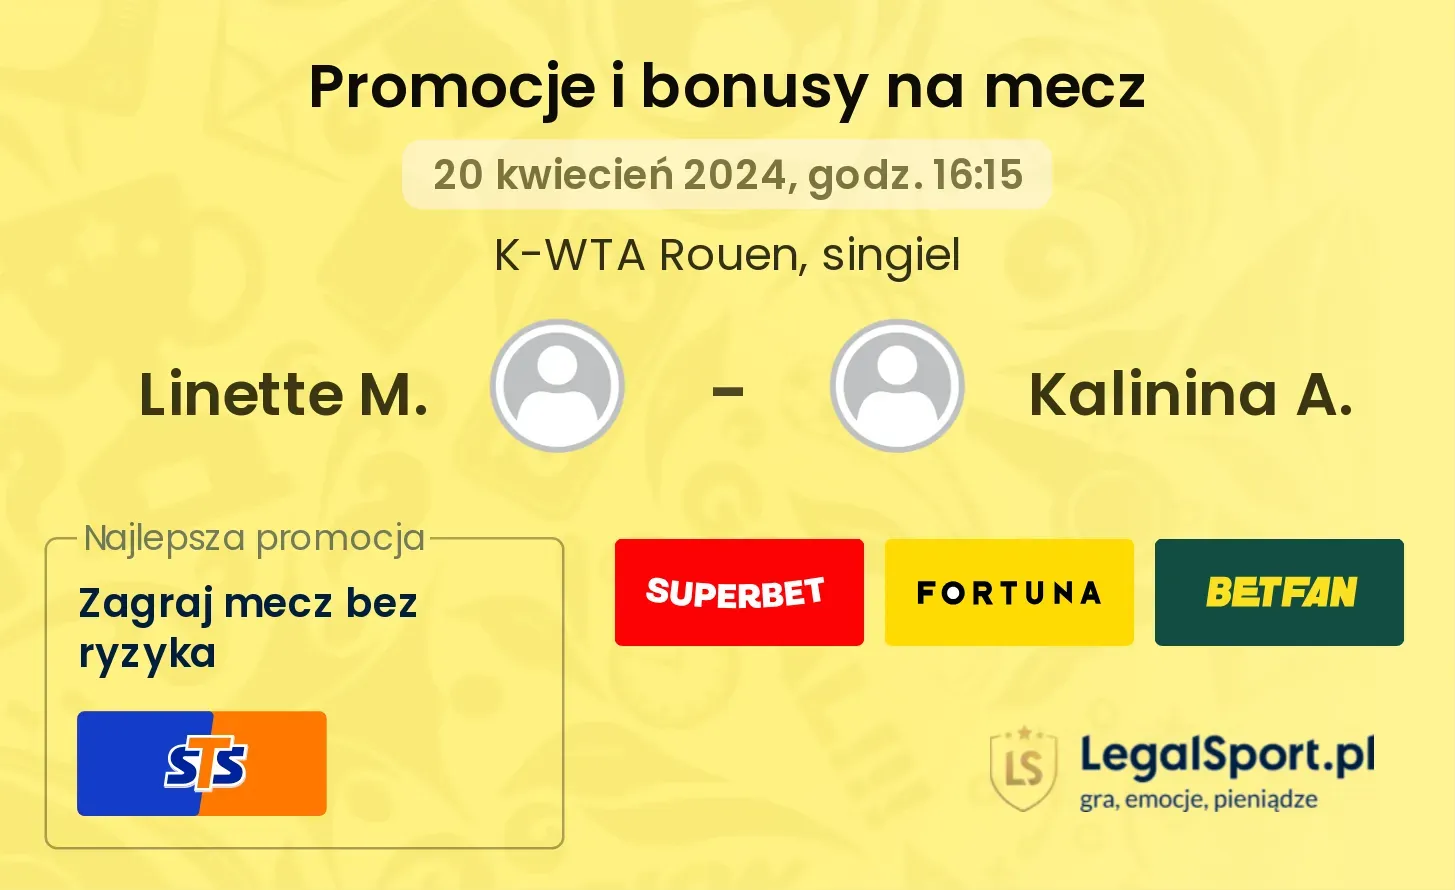 Linette M. - Kalinina A. promocje bonusy na mecz